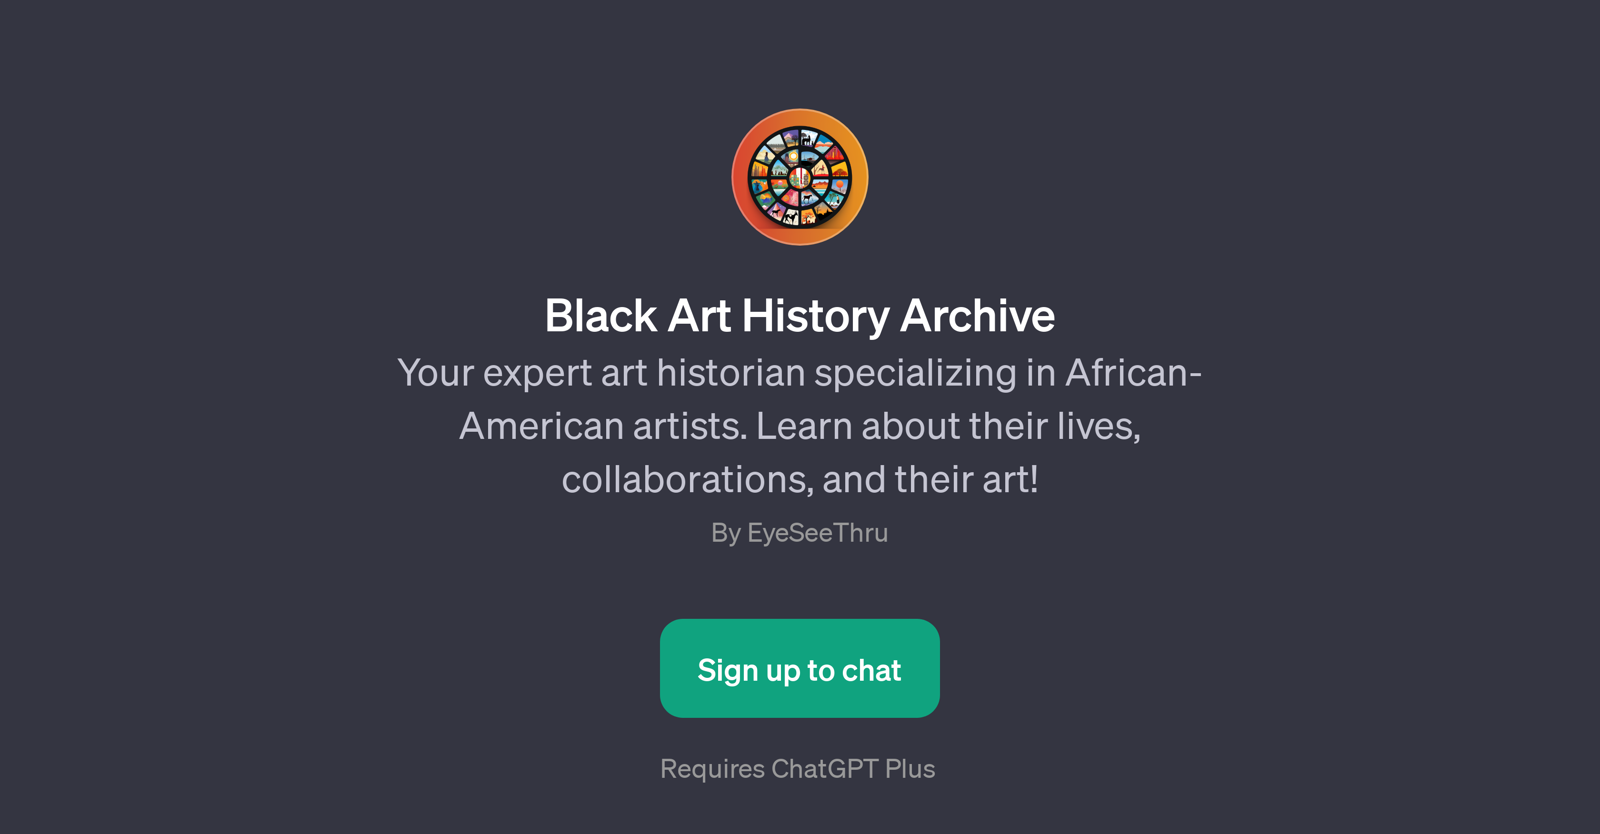 Black Art History Archive website